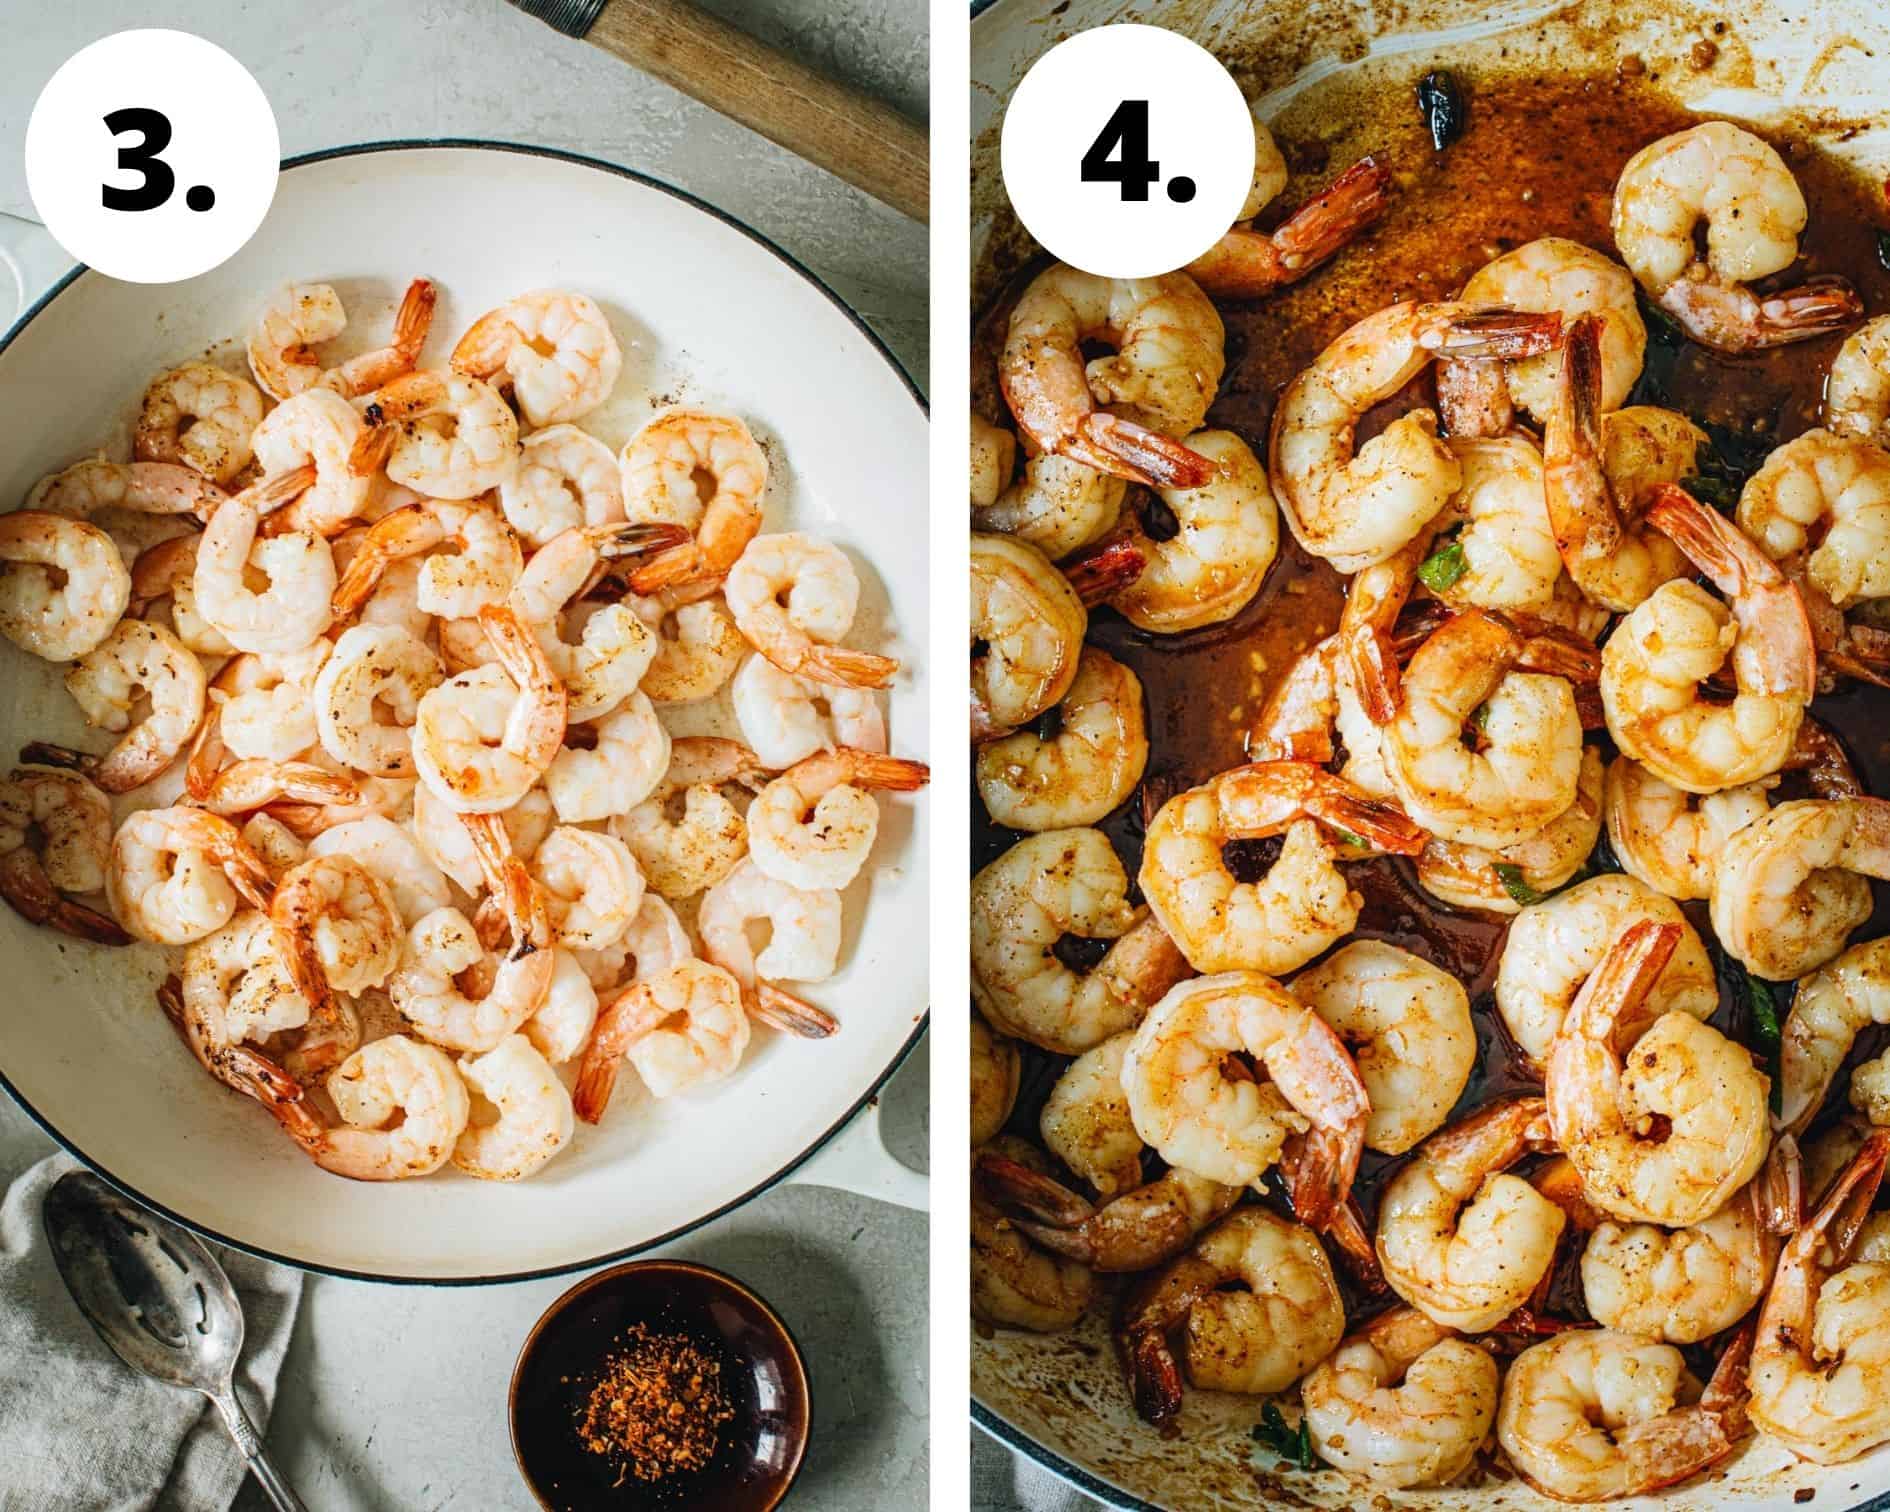 Cajun shrimp process steps 3 and 4.